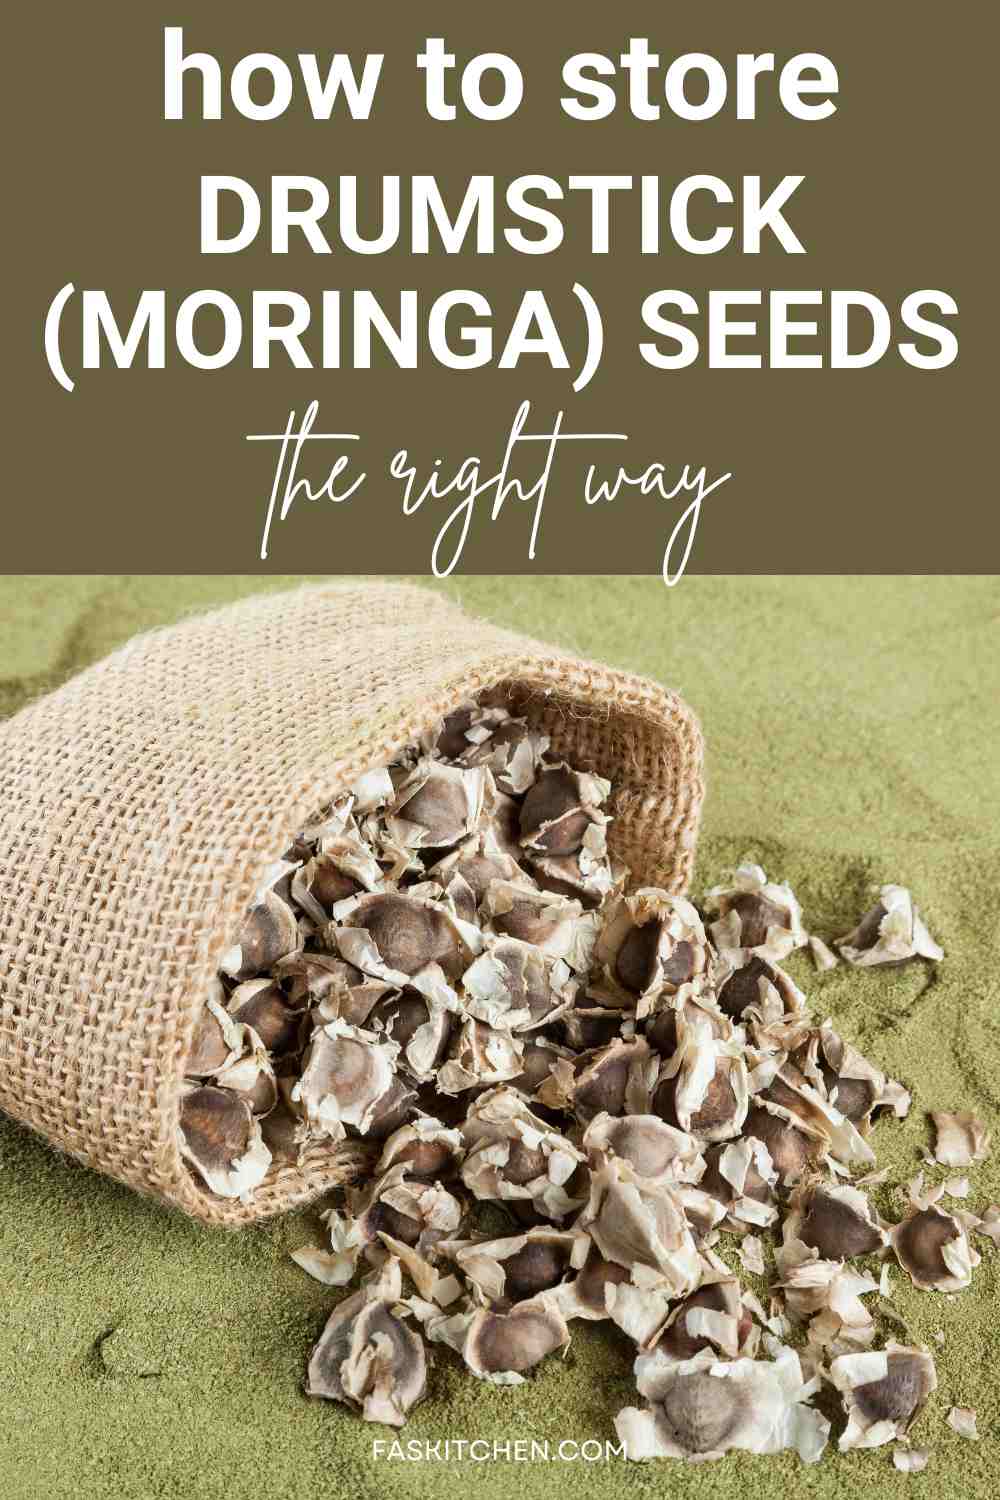 Drumstick (Moringa) Seeds storing